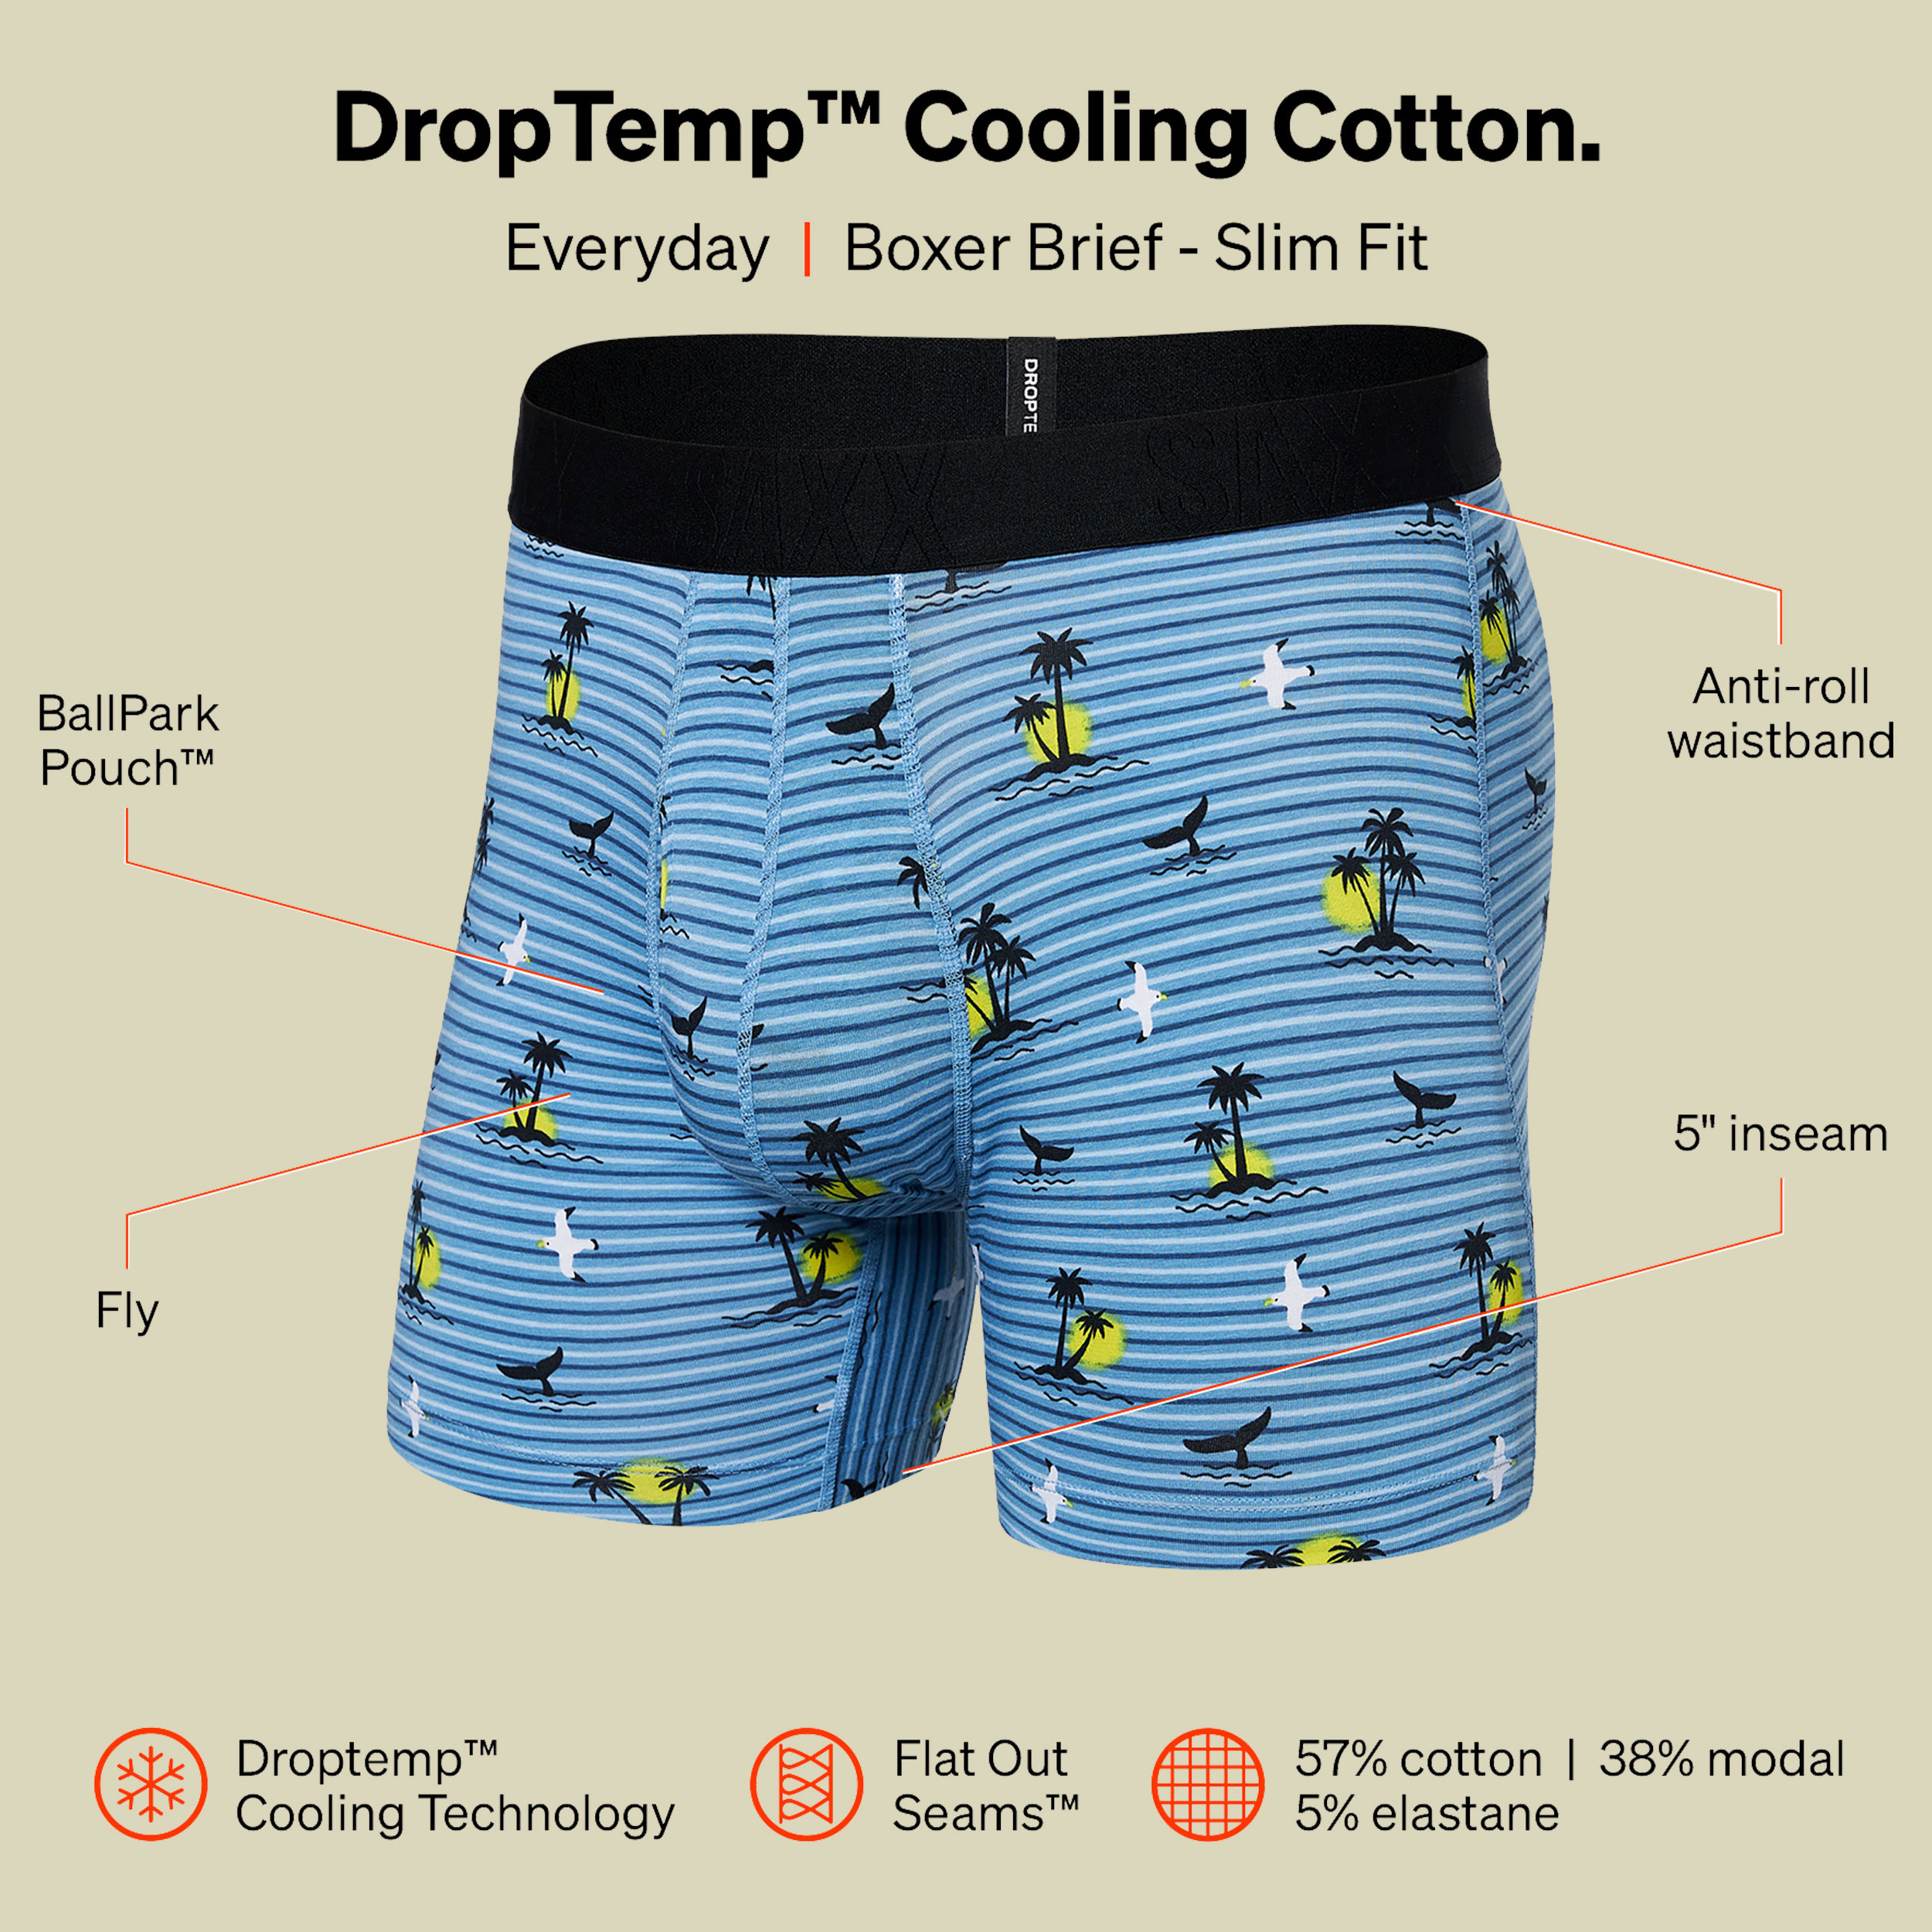 Droptemp Cooling Cotton Boxer Brief Fly blau S - offshore breeze